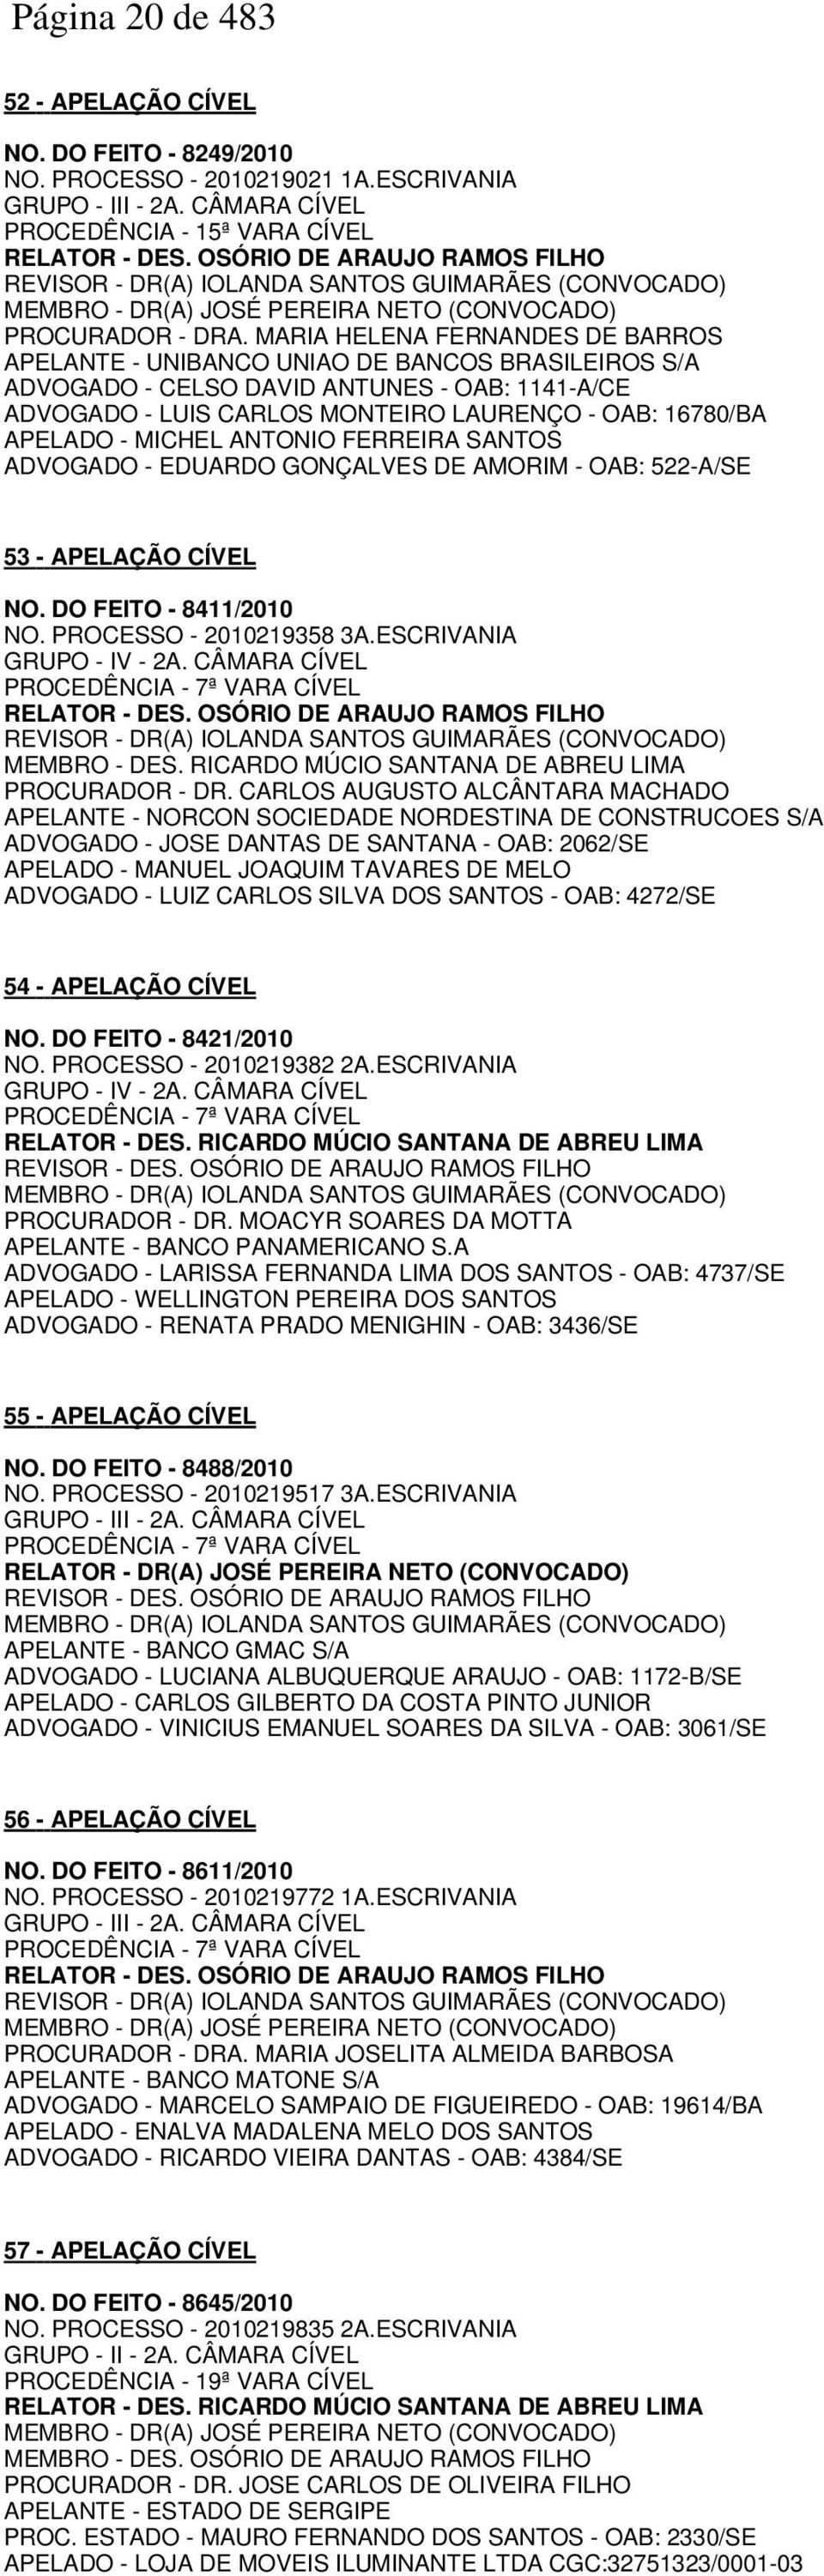 MARIA HELENA FERNANDES DE BARROS APELANTE - UNIBANCO UNIAO DE BANCOS BRASILEIROS S/A ADVOGADO - CELSO DAVID ANTUNES - OAB: 1141-A/CE ADVOGADO - LUIS CARLOS MONTEIRO LAURENÇO - OAB: 16780/BA APELADO -